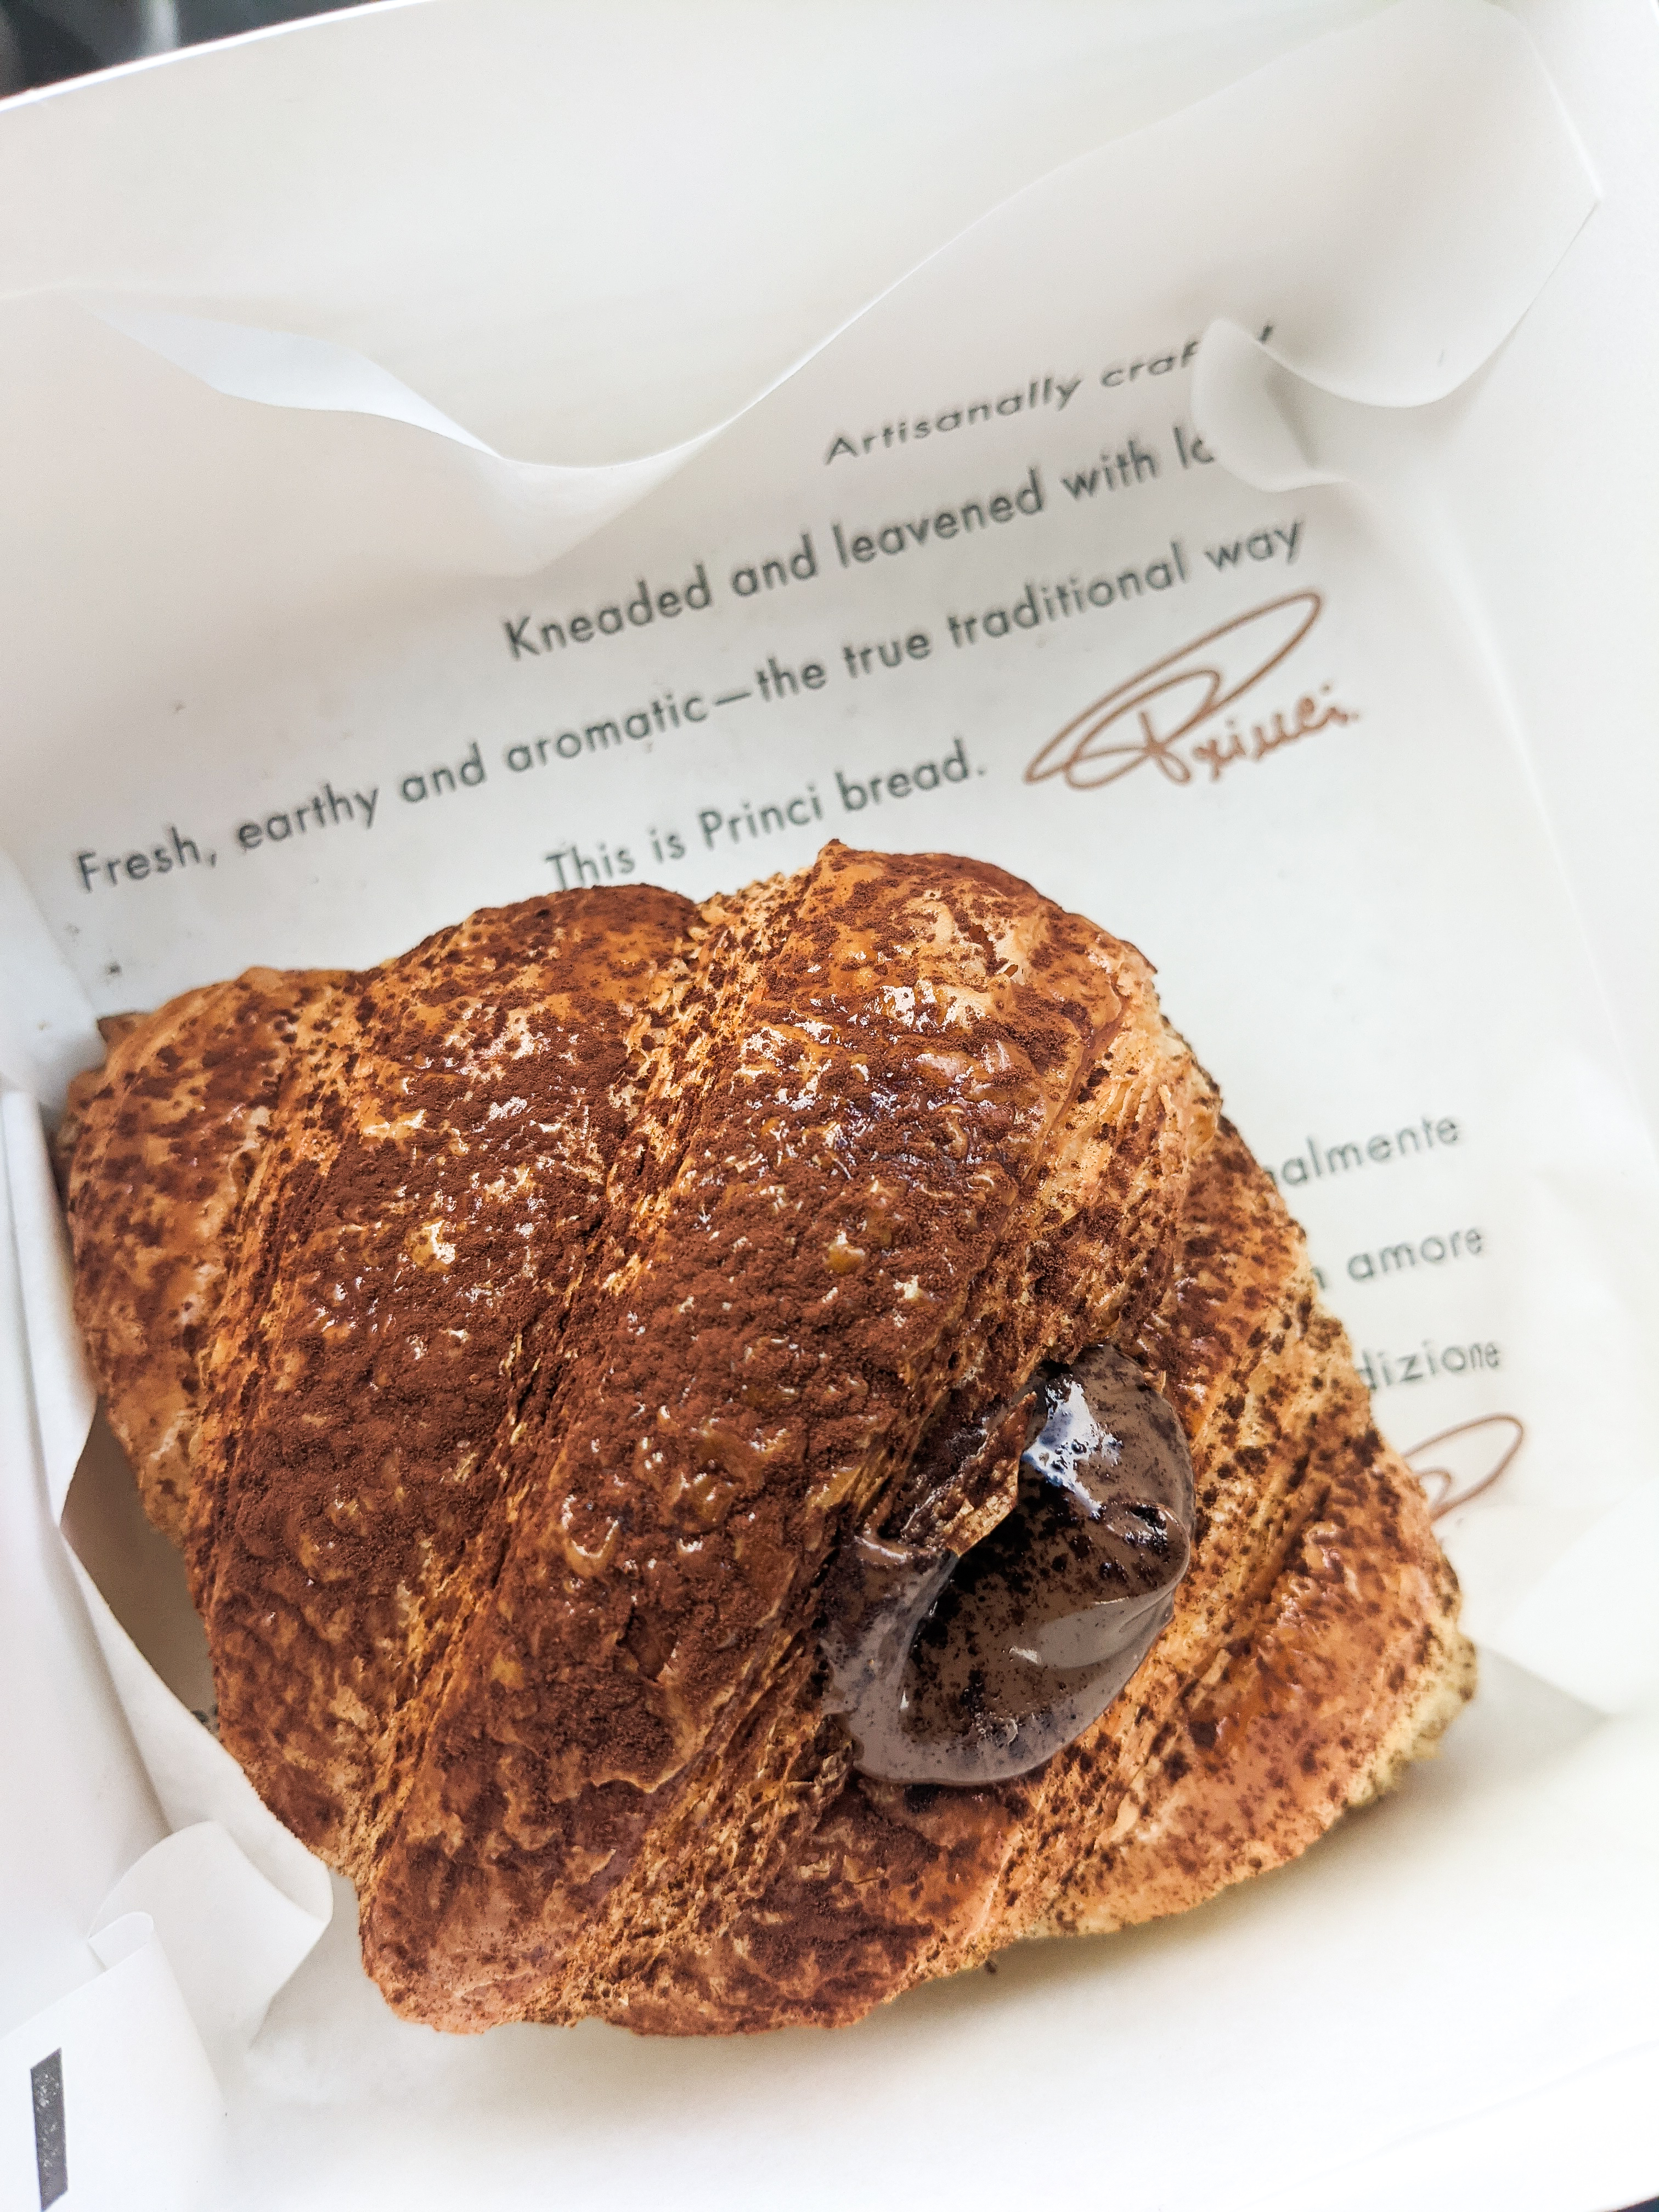 Chocolate hazelnut croissant Princi bread